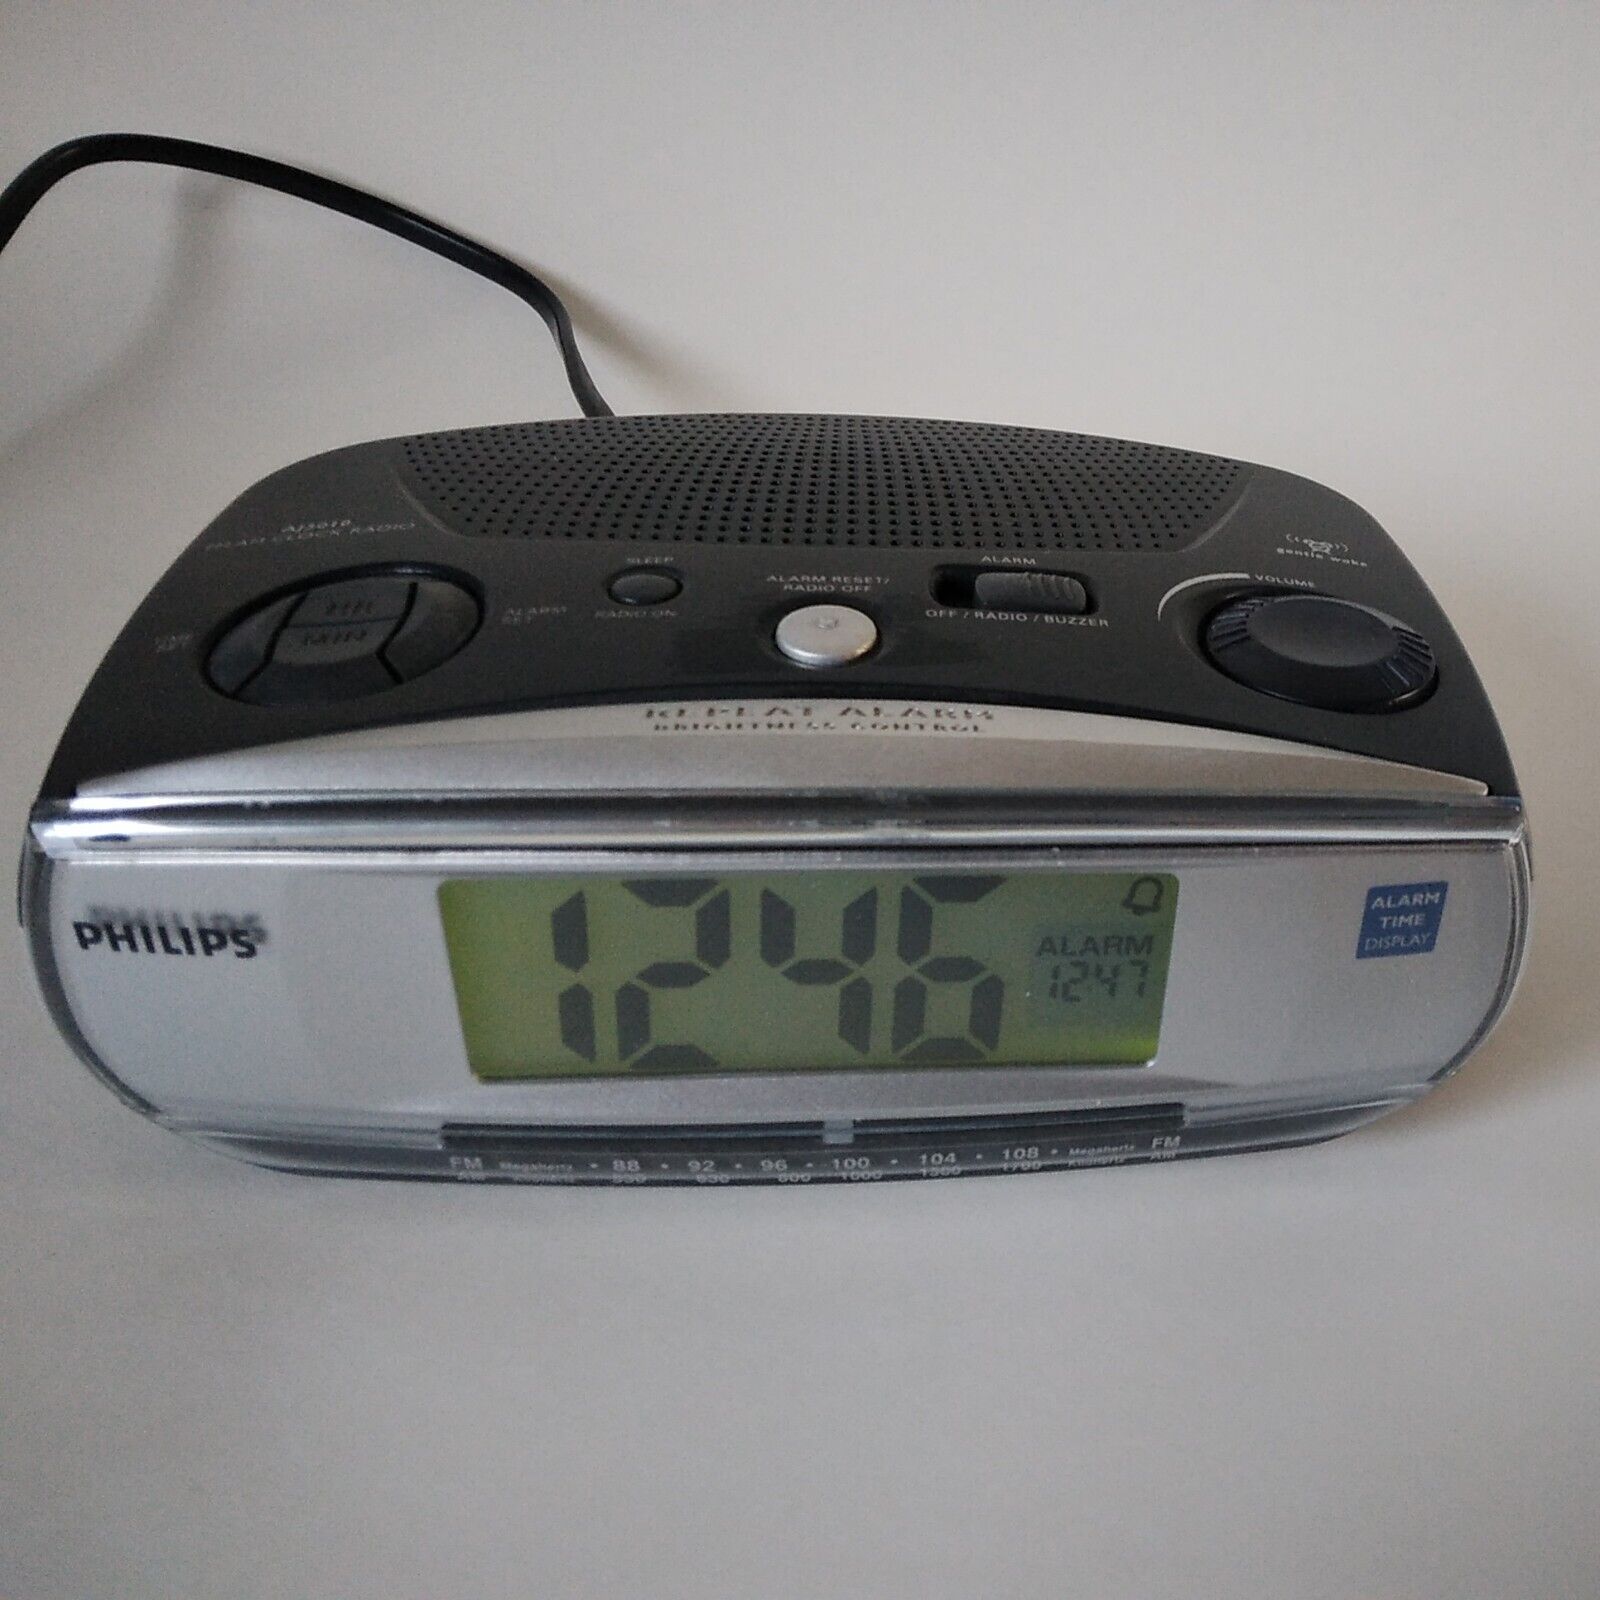 Philips Model: AJ3010/17 Radio Alarm Clock-AM/FM-Corded-Blue-2000-Tested Works